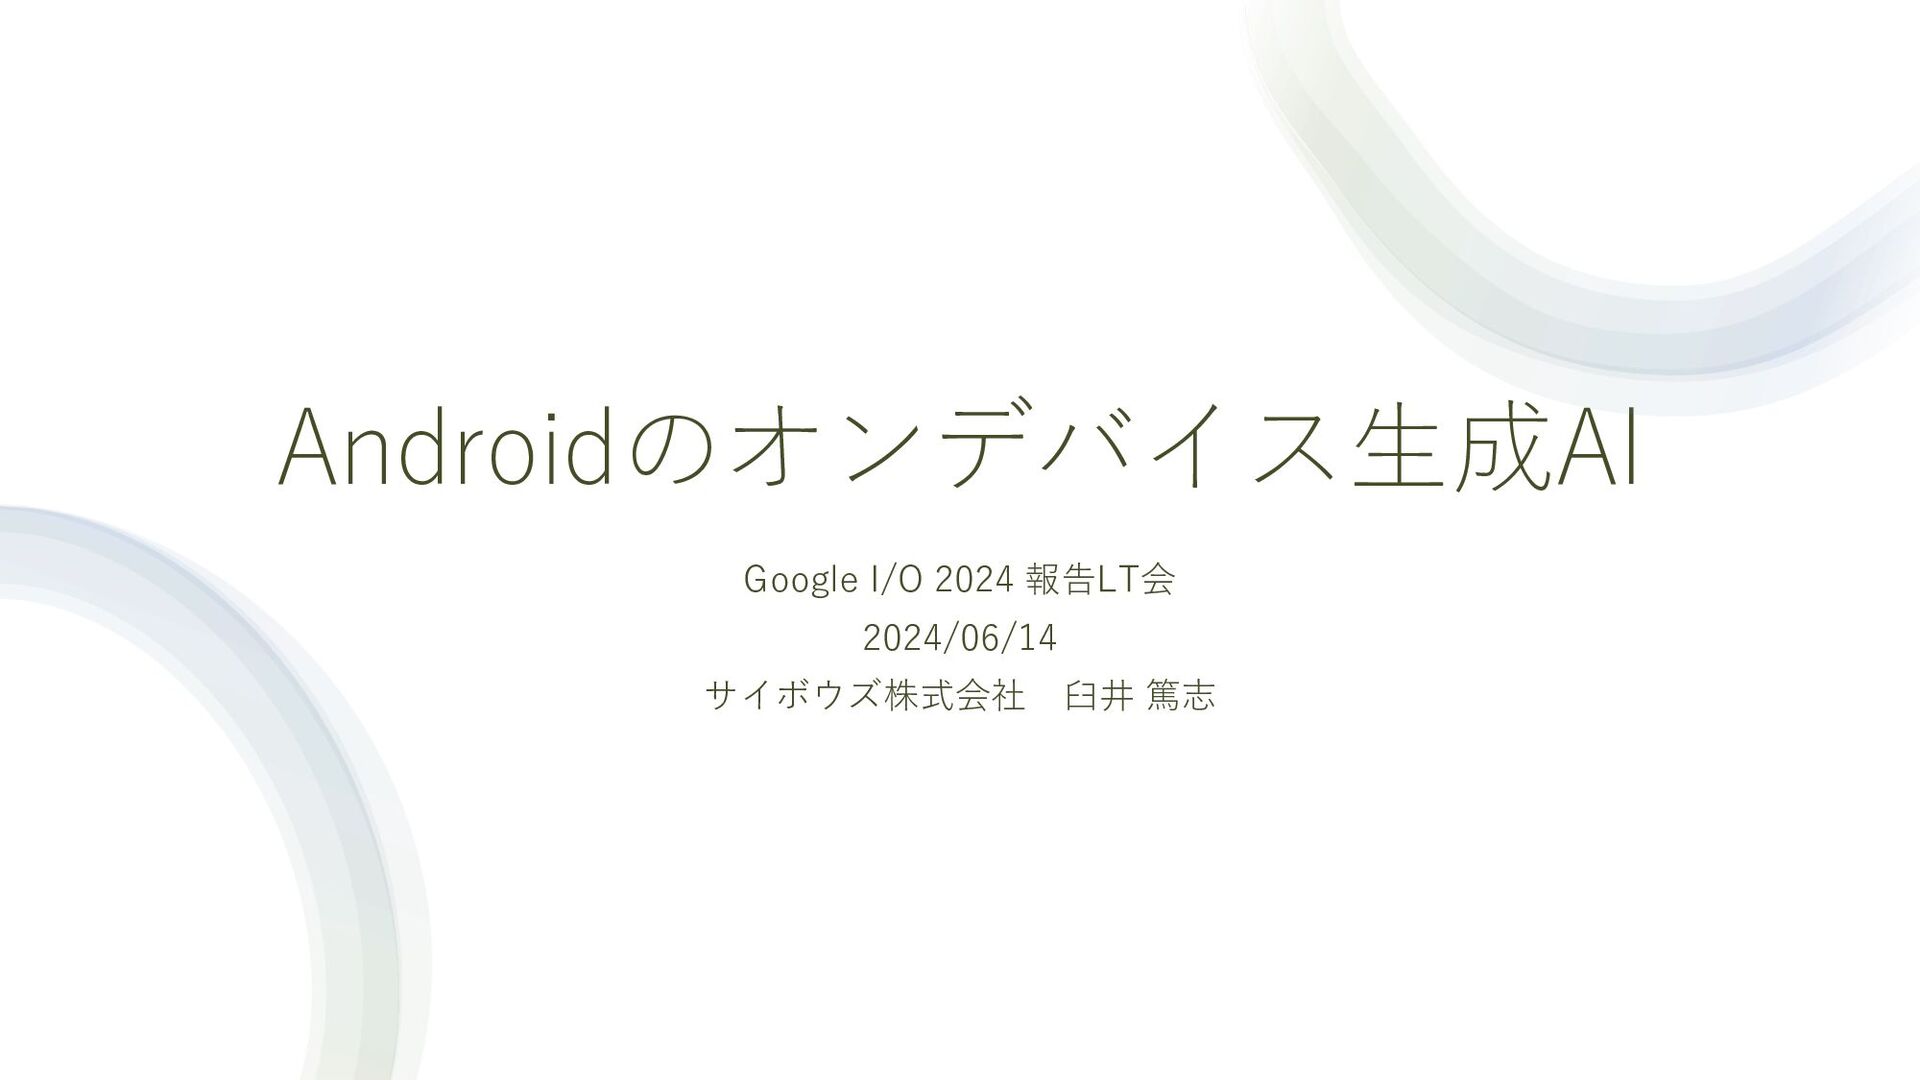 Slide Top: Google I/O 2024 報告LT会（Androidのオンデバイス生成AI）